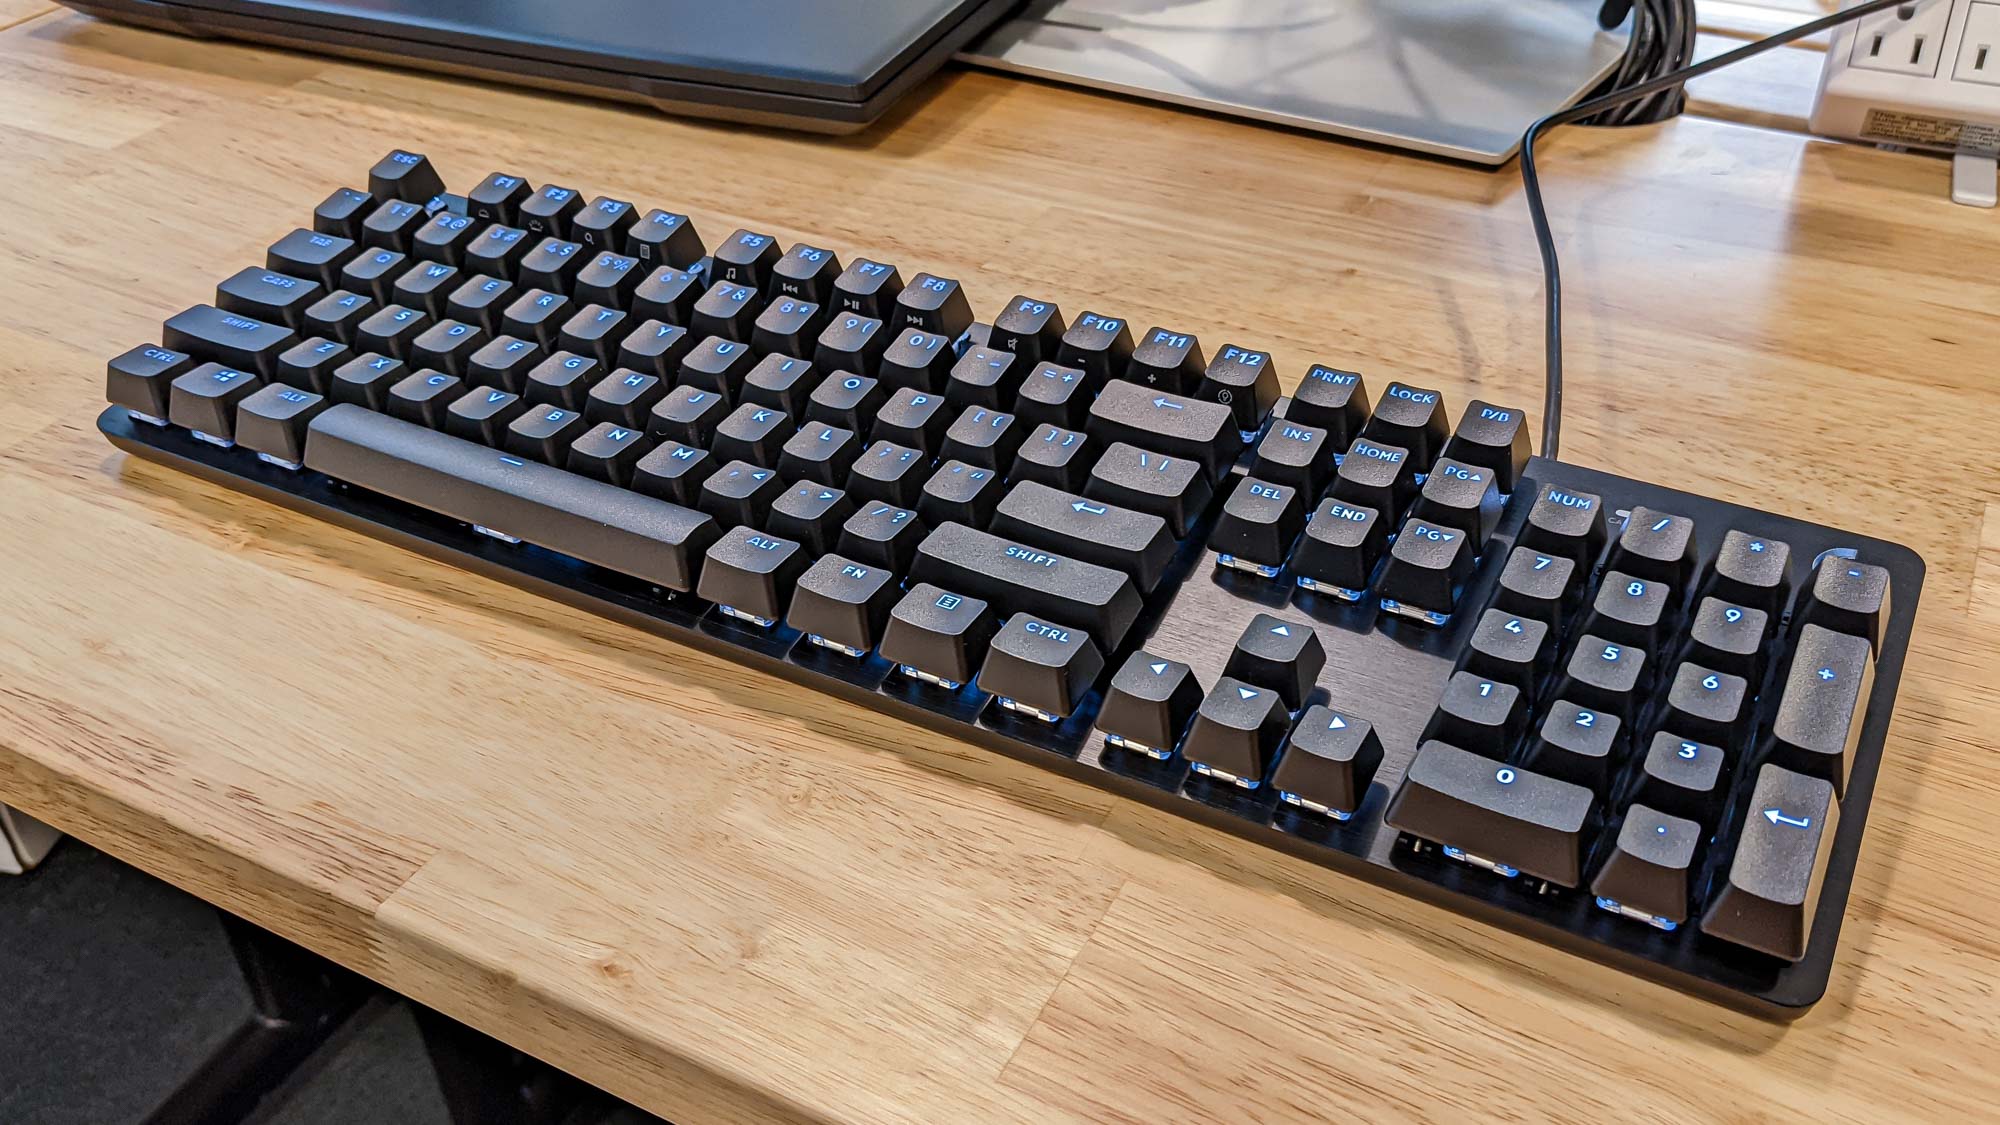 The Logitech G413 TKL SE Mechanical Keyboard Review